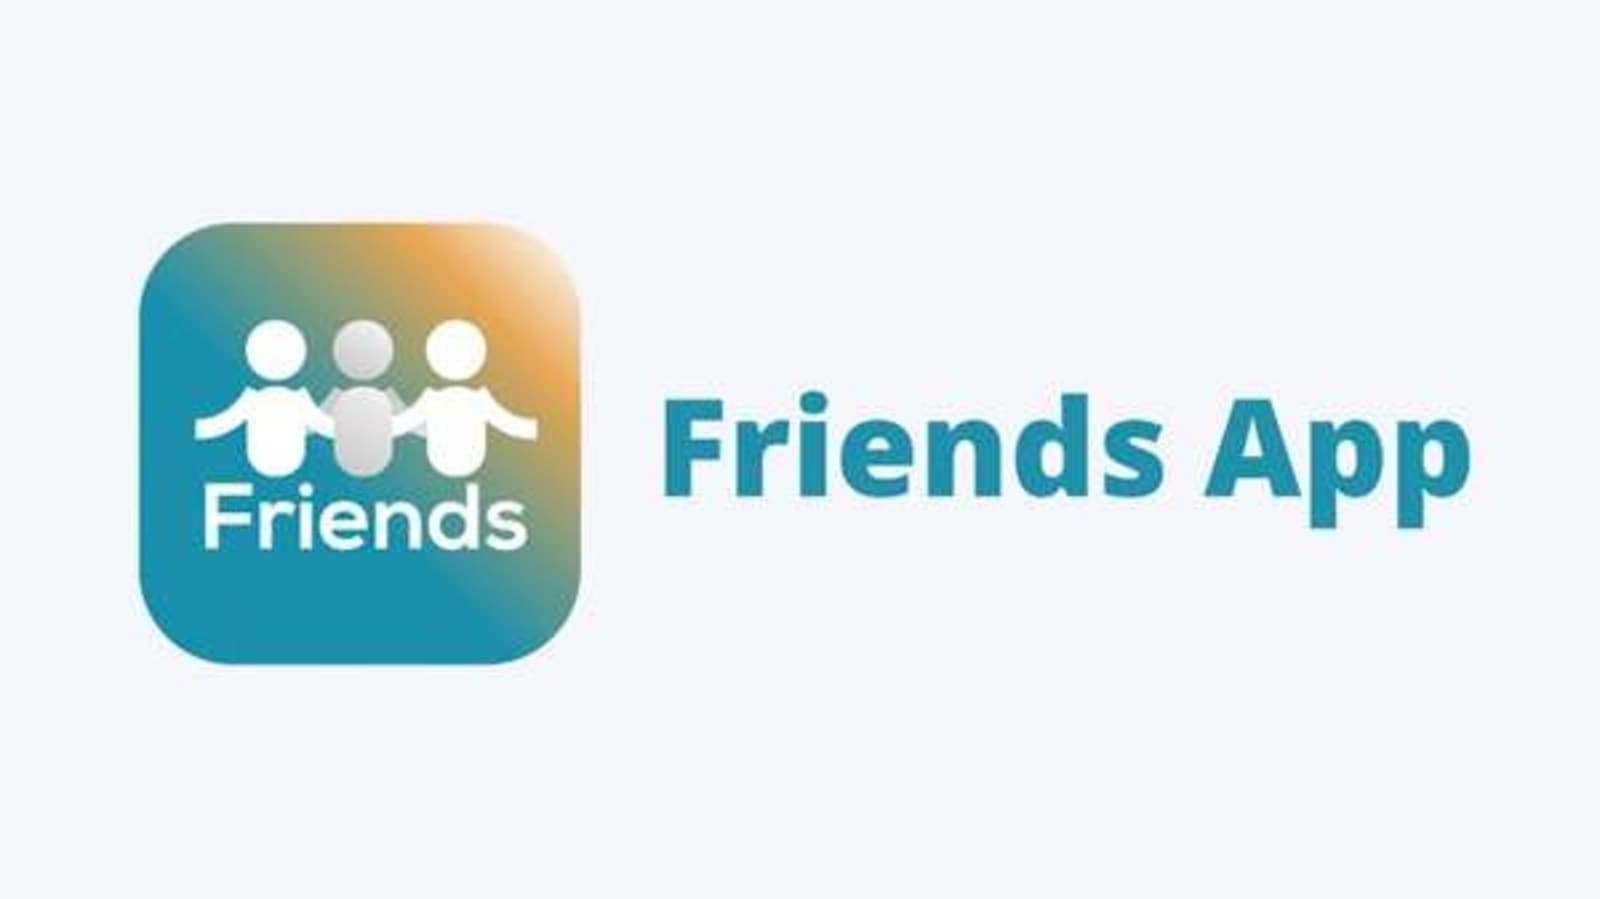 Friends App's communitydriven approach brings in a better social